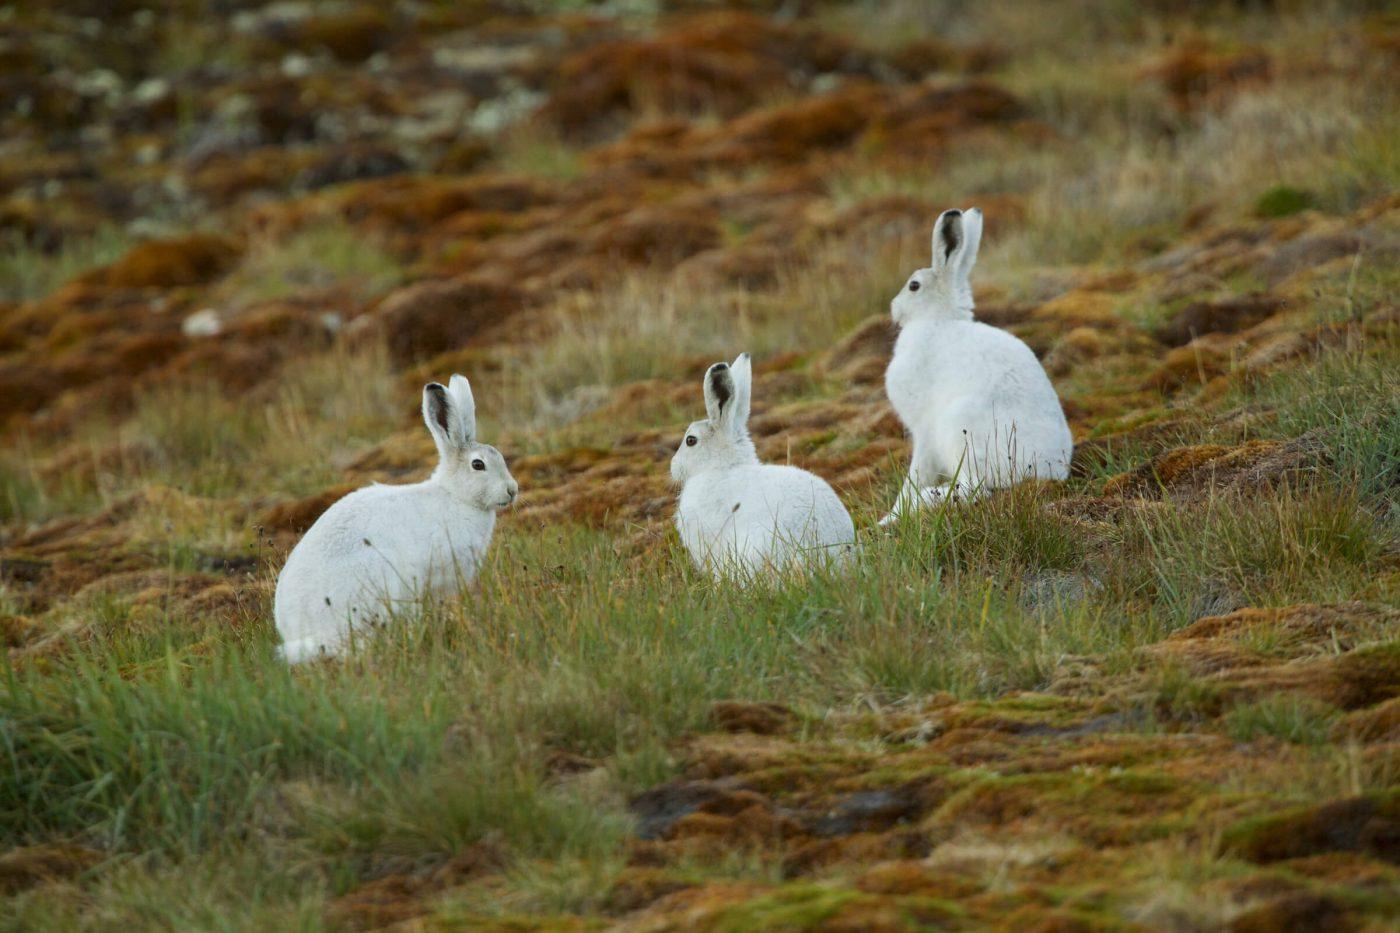 Three mountain hares in North Greenland. Photo by: Glenn Mattsing